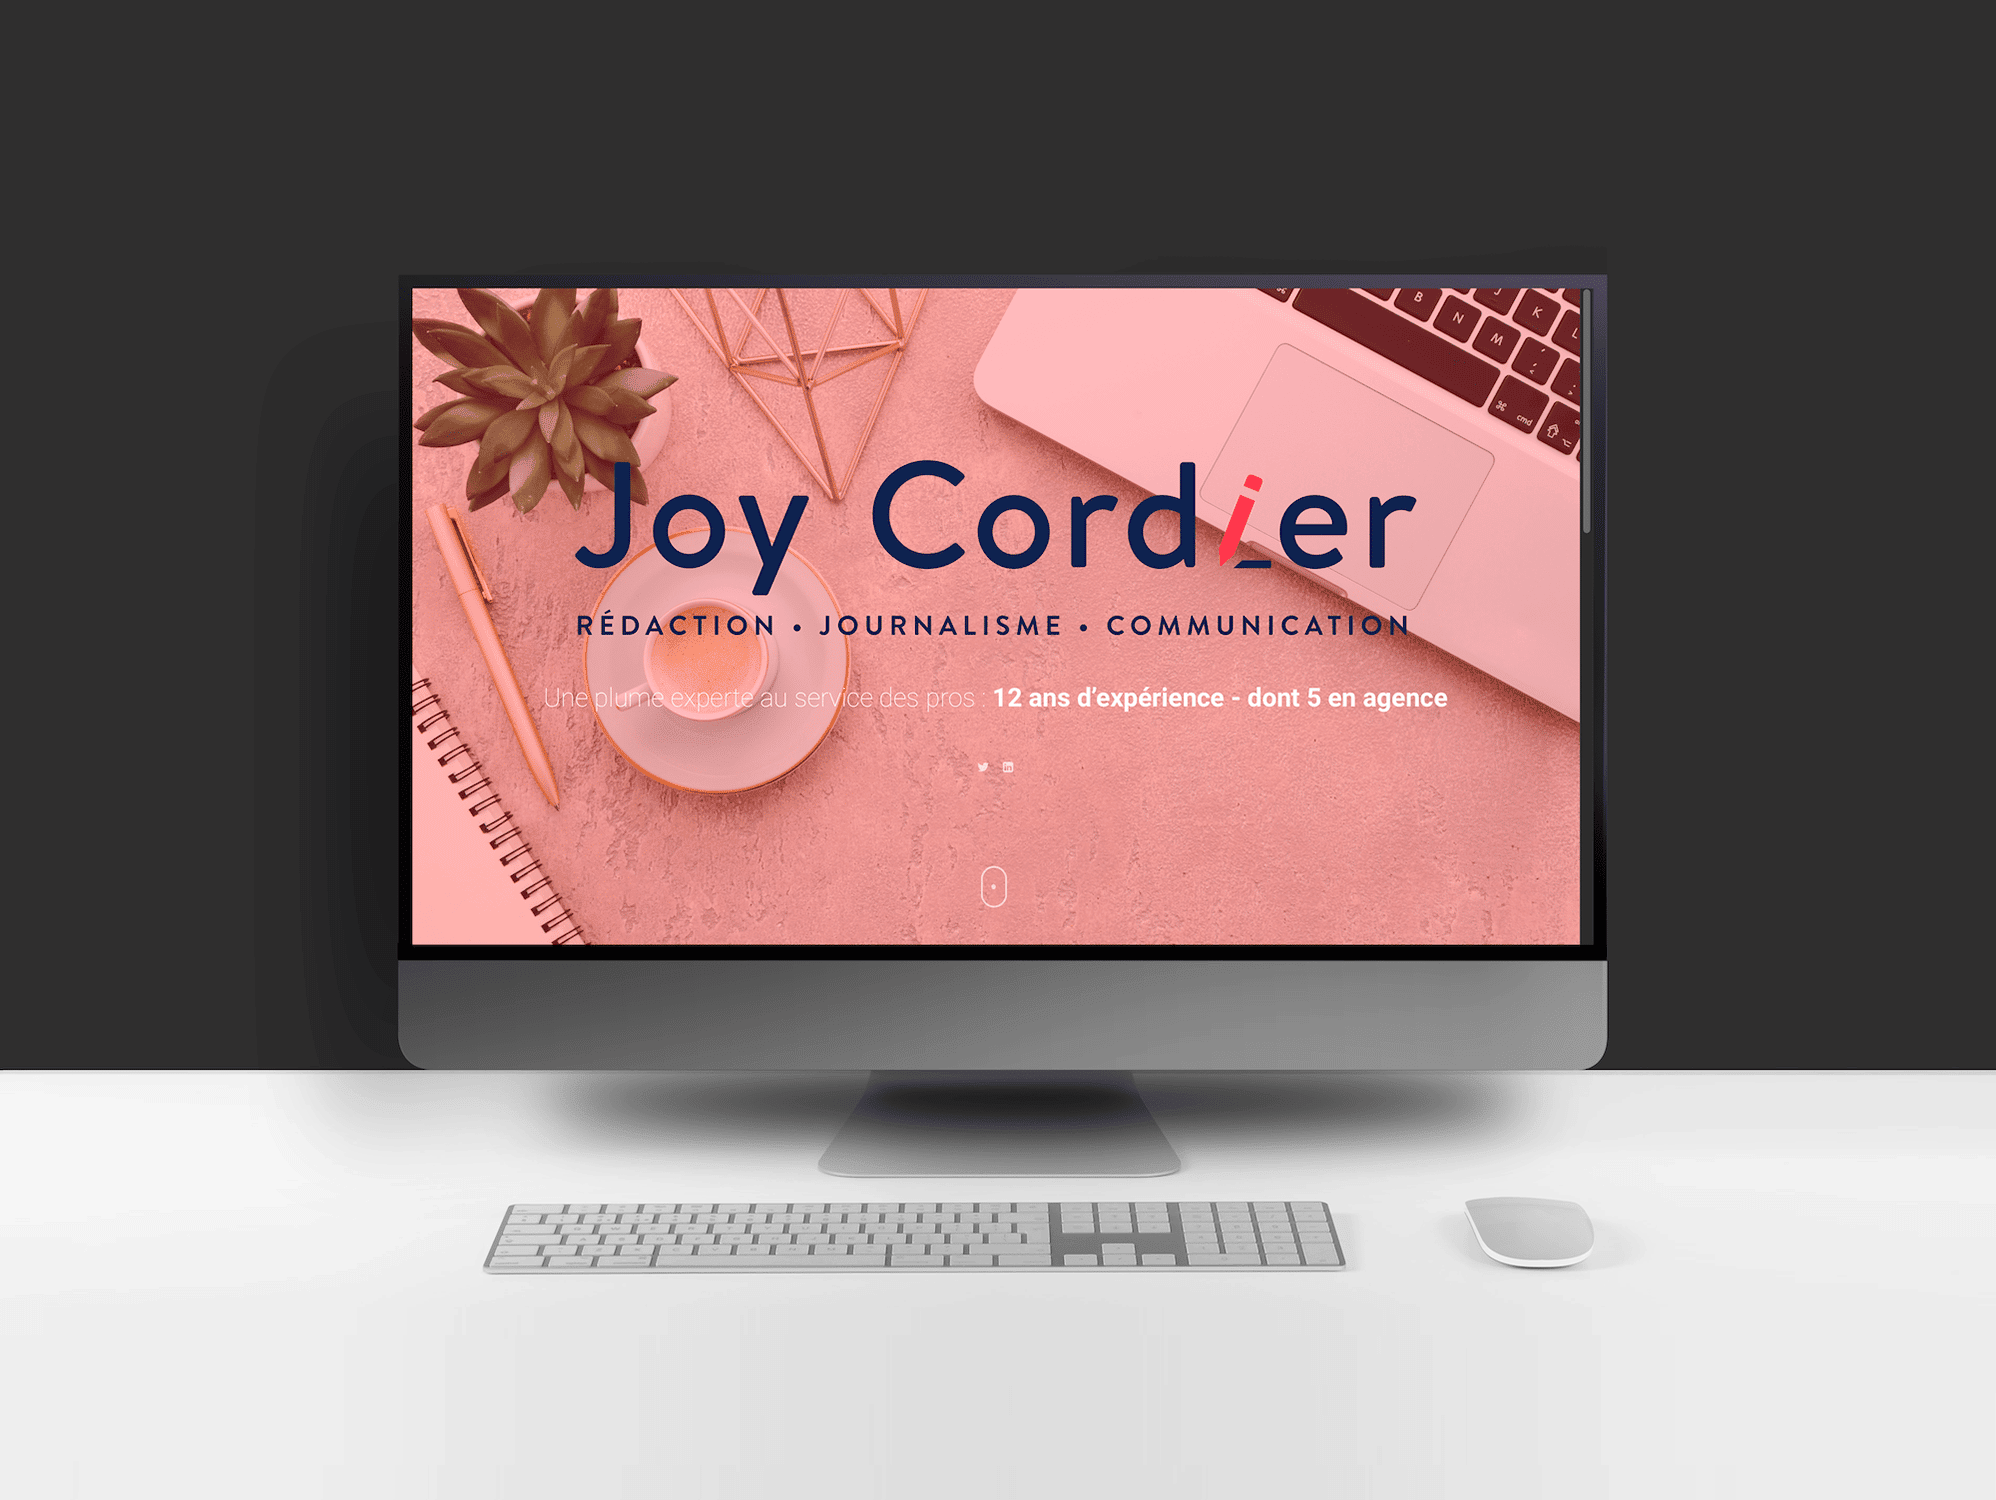 Joy Cordier